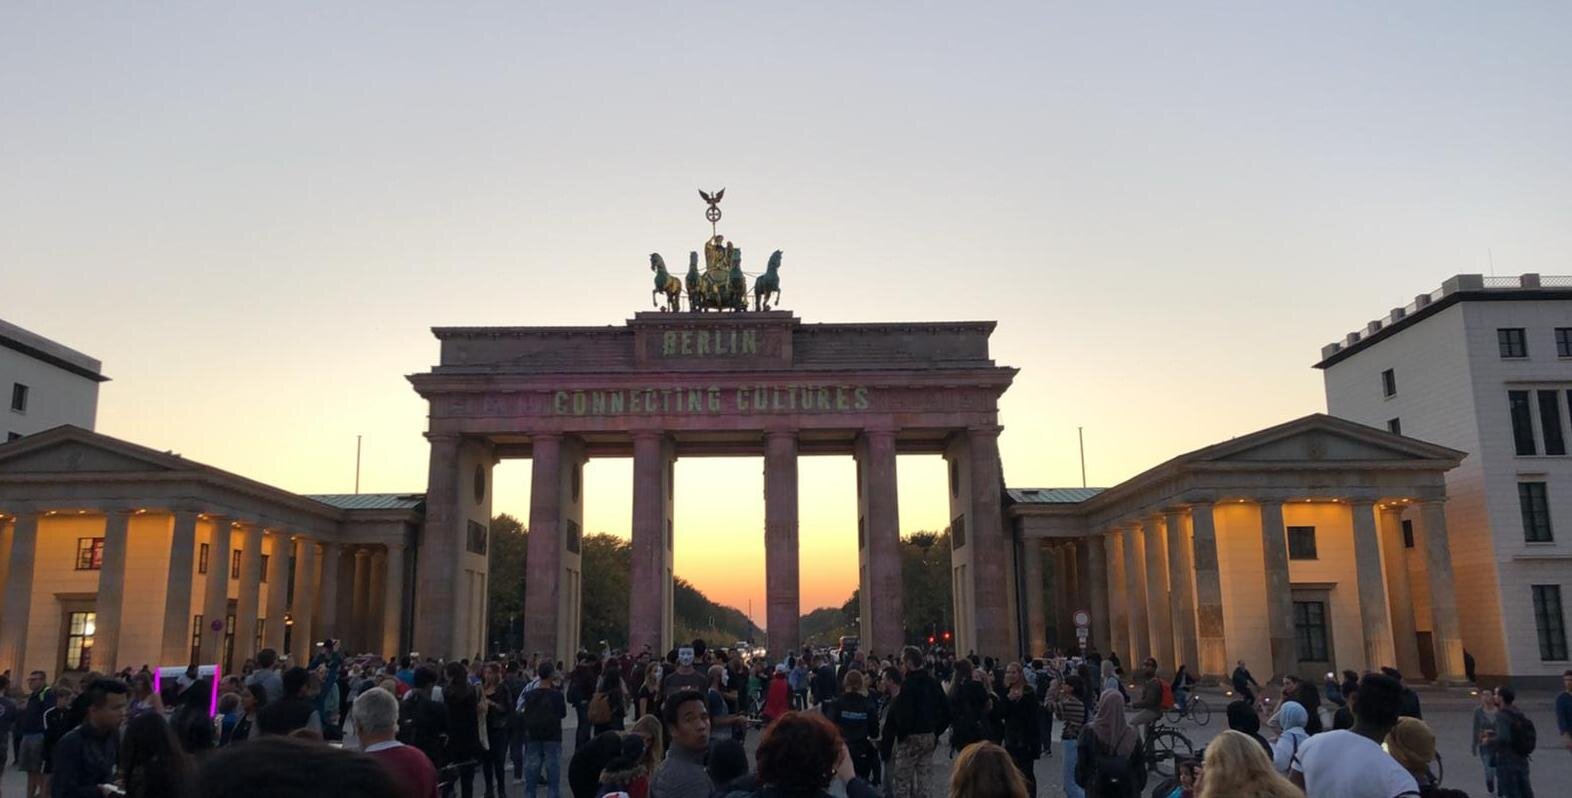 Exploring Germany: The Brandenburg Gate